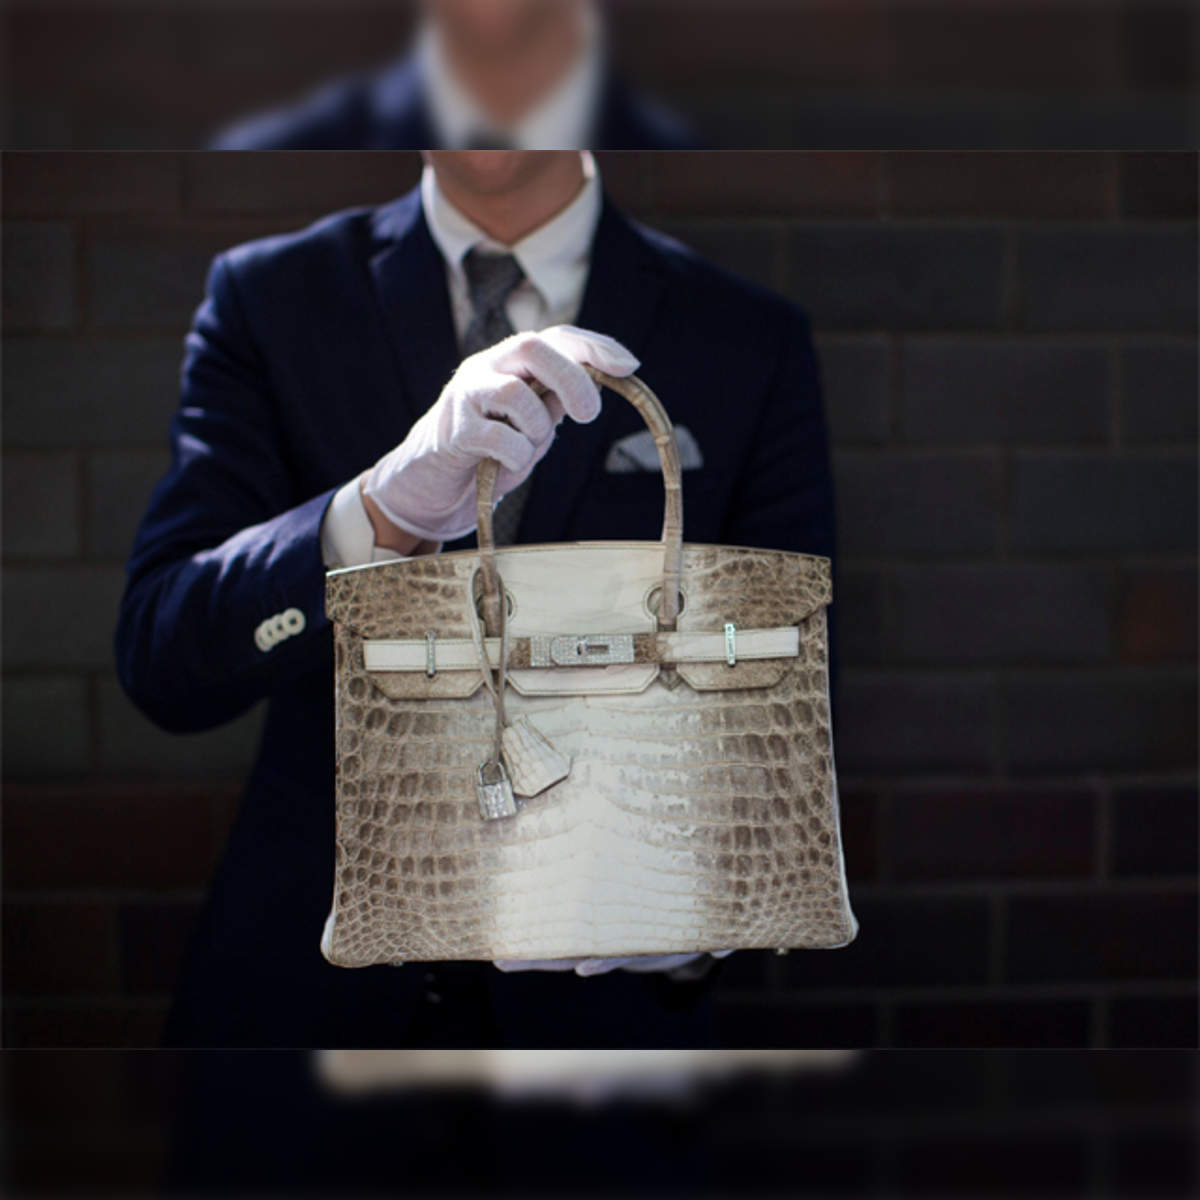 himlayan birkin: Here's why a Hermès Birkin bag has been making headlines -  The Economic Times